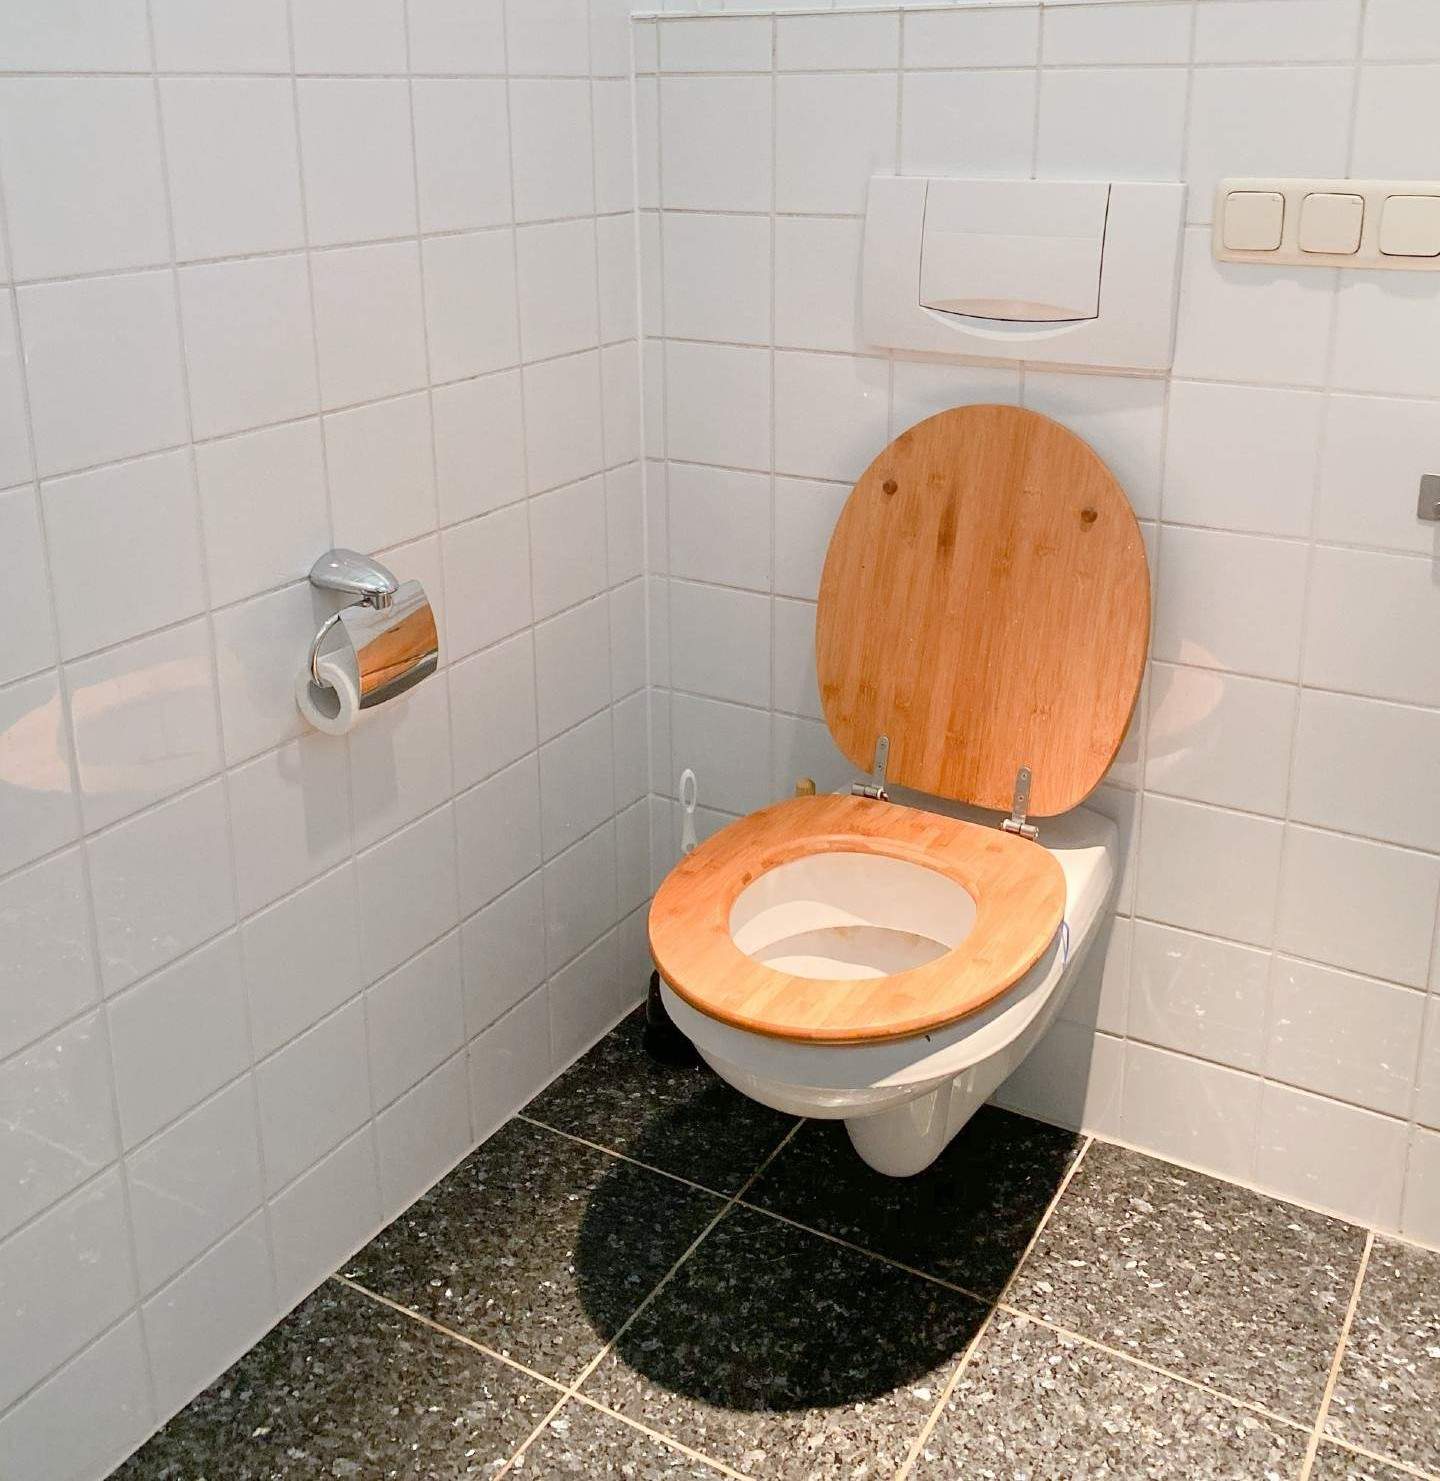 toilet repair services in Lakeland, FL